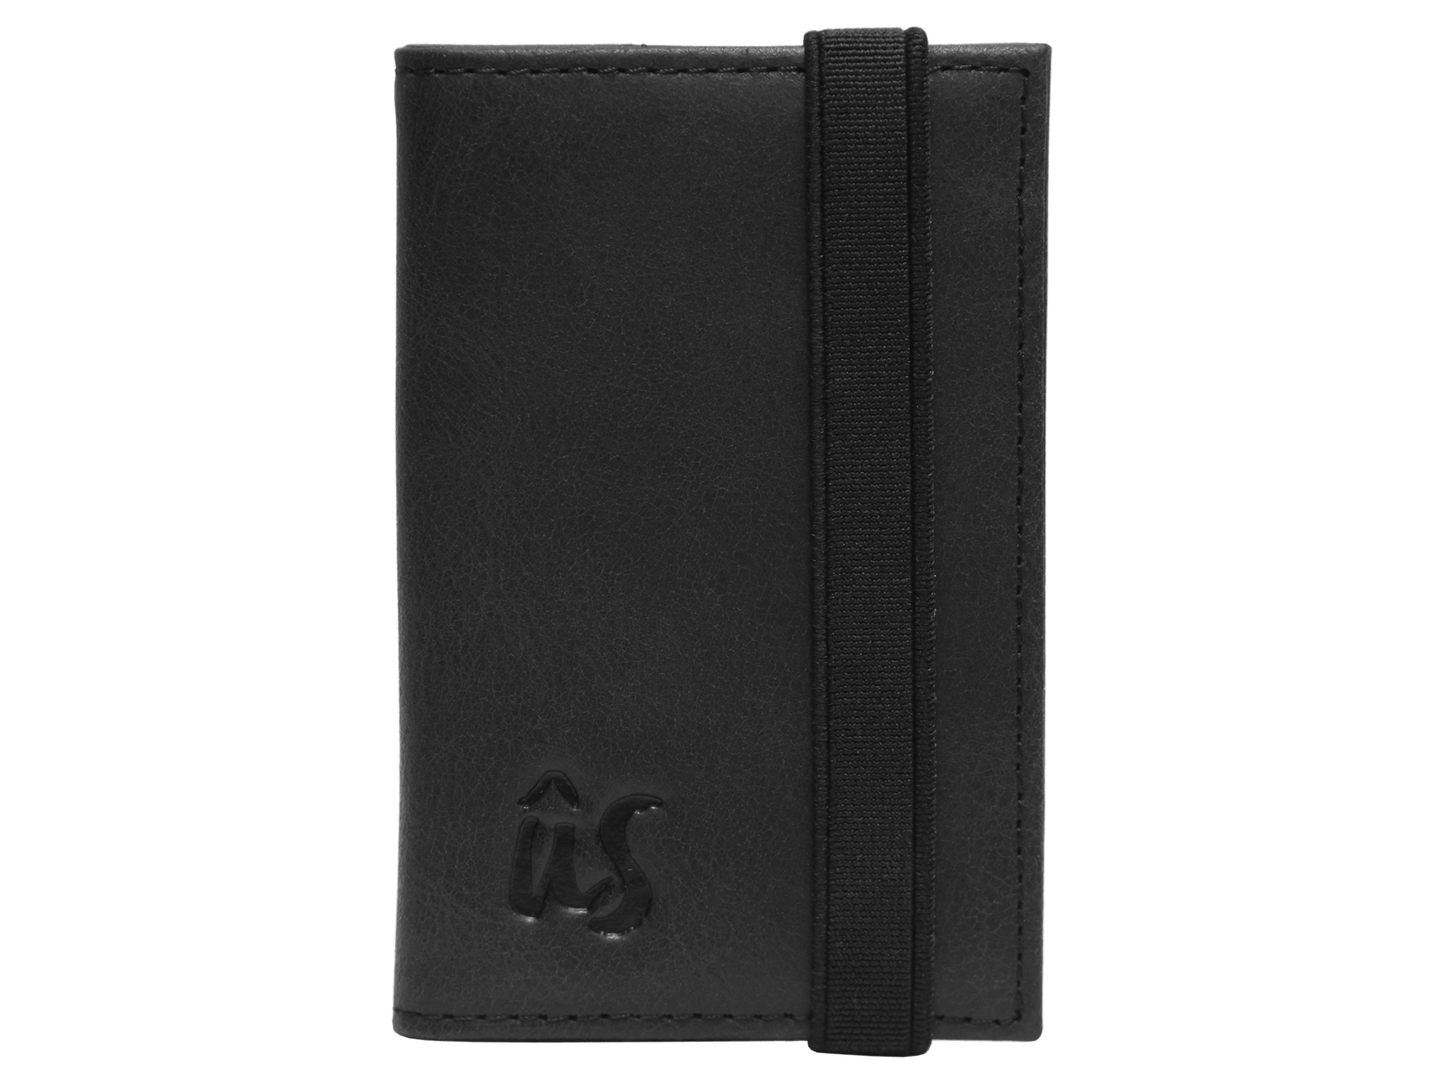 The Titou Card Wallet in Onyx Black #onyx-black